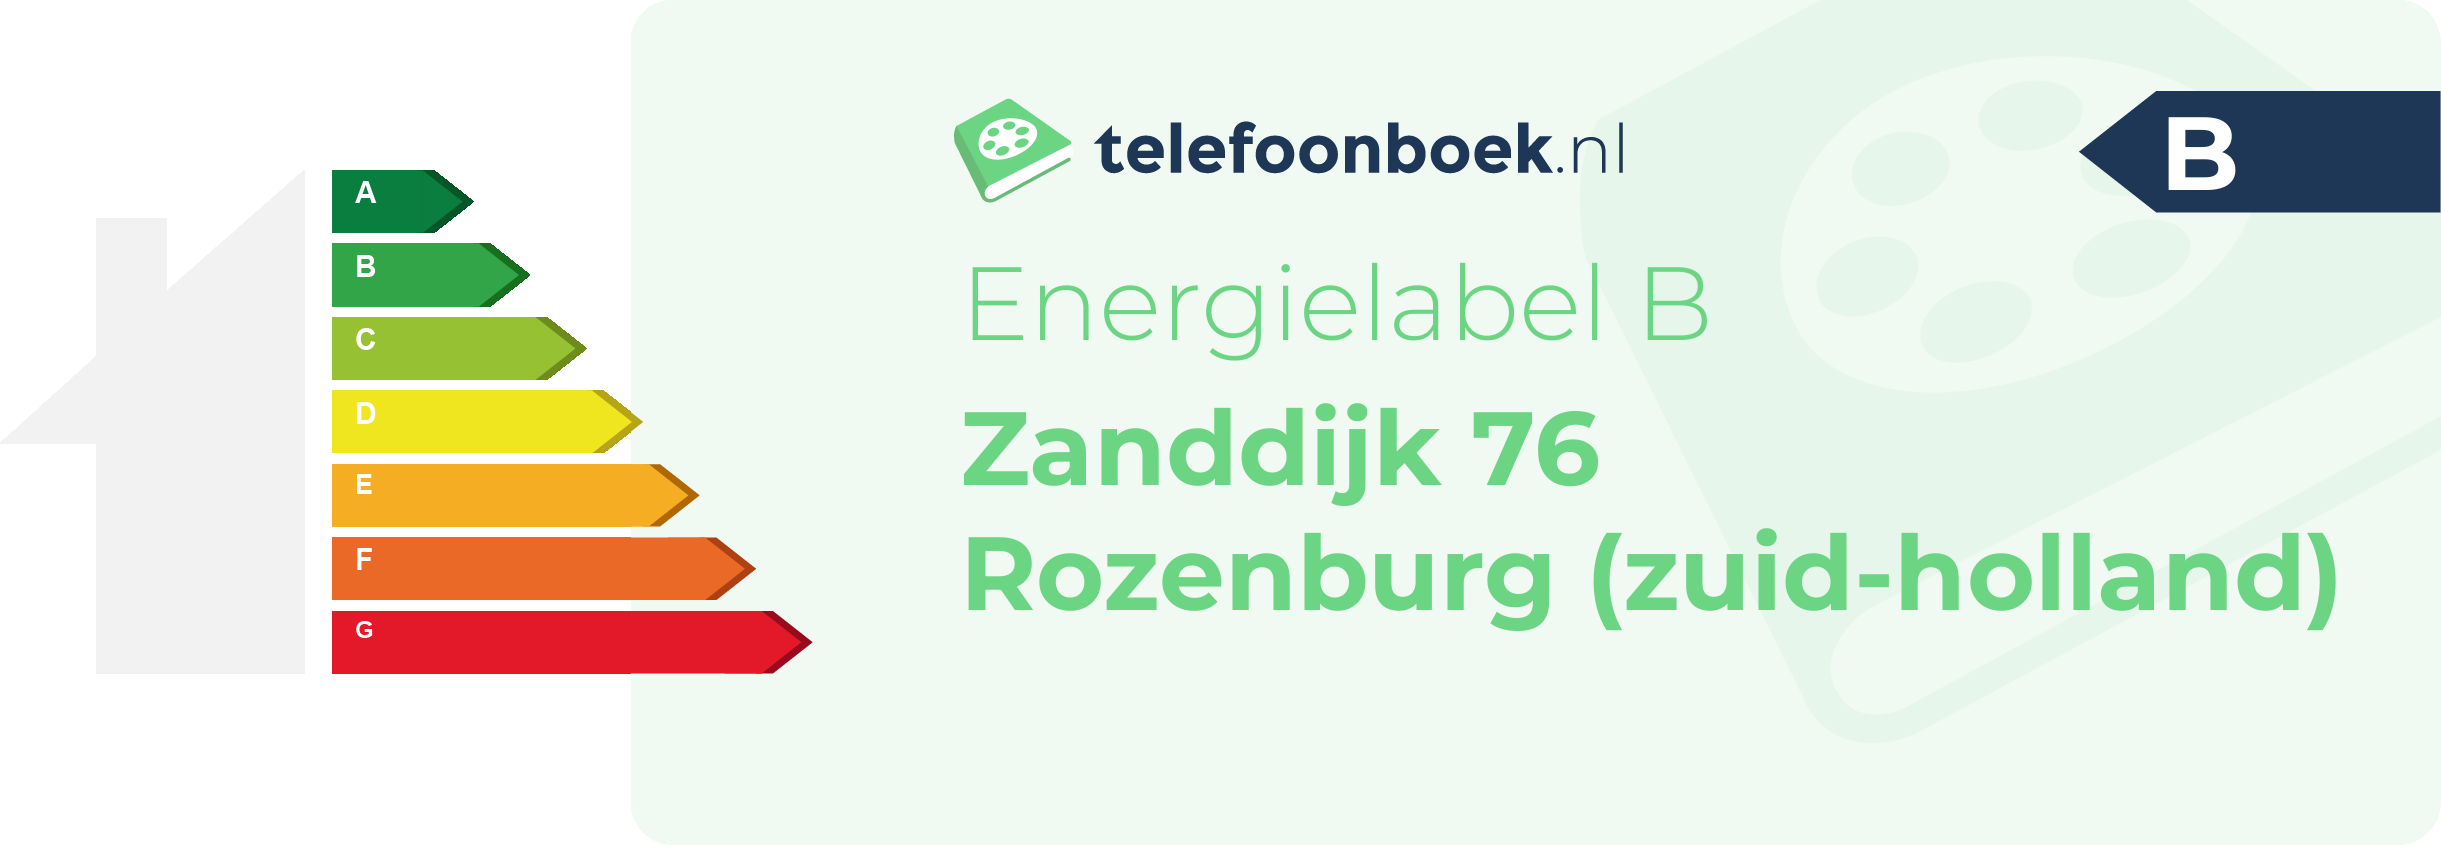 Energielabel Zanddijk 76 Rozenburg (Zuid-Holland)